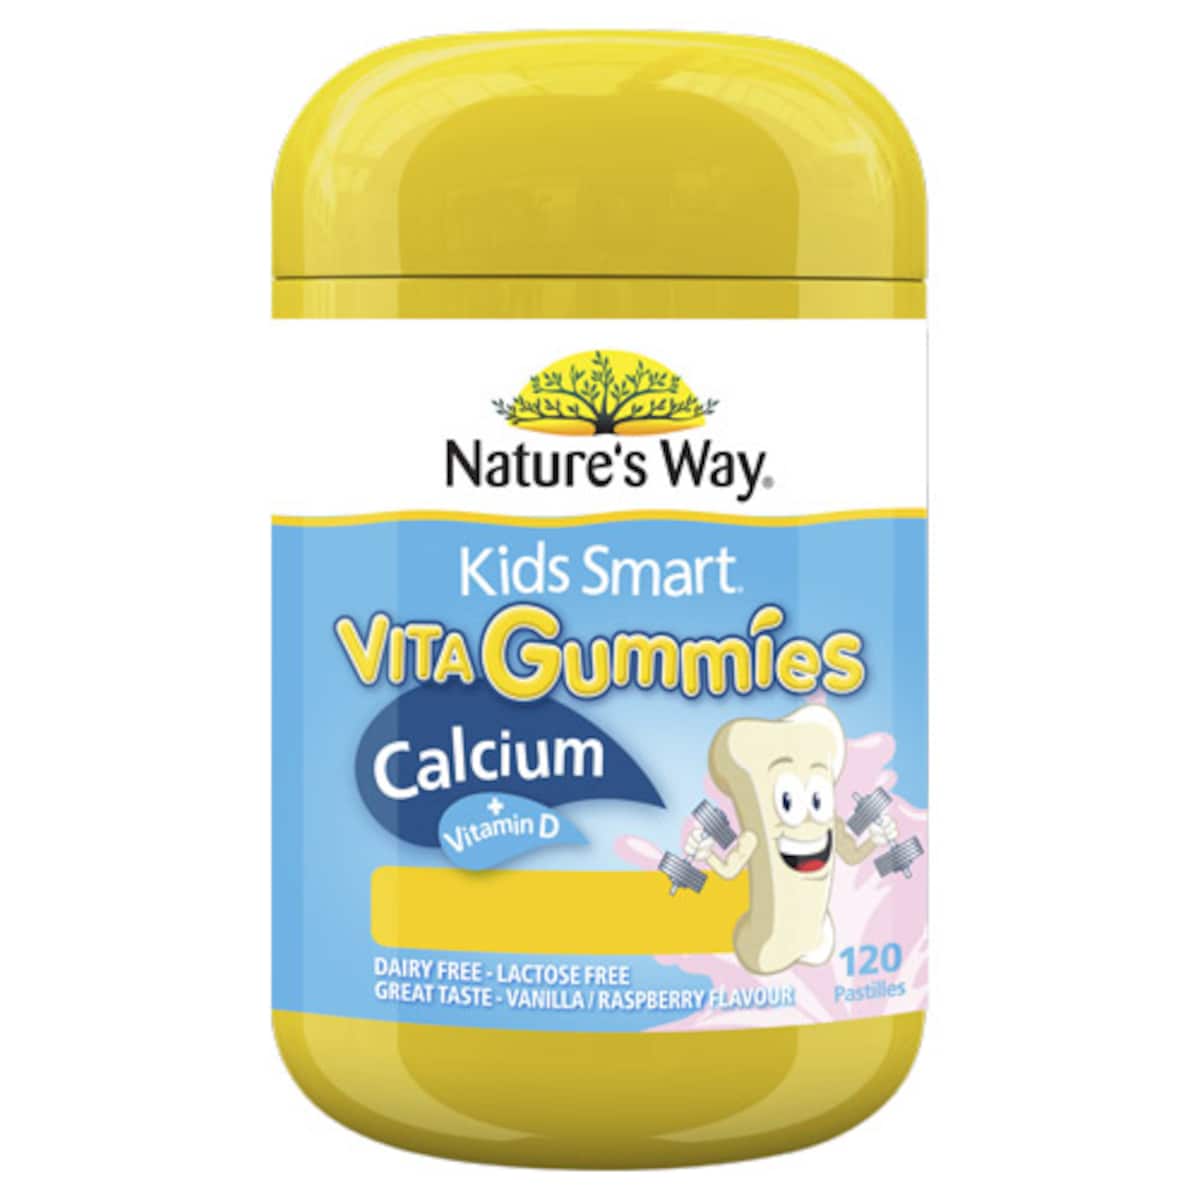 Natures Way Kids Smart Vita Gummies Calcium + Vitamin D 120 Pack